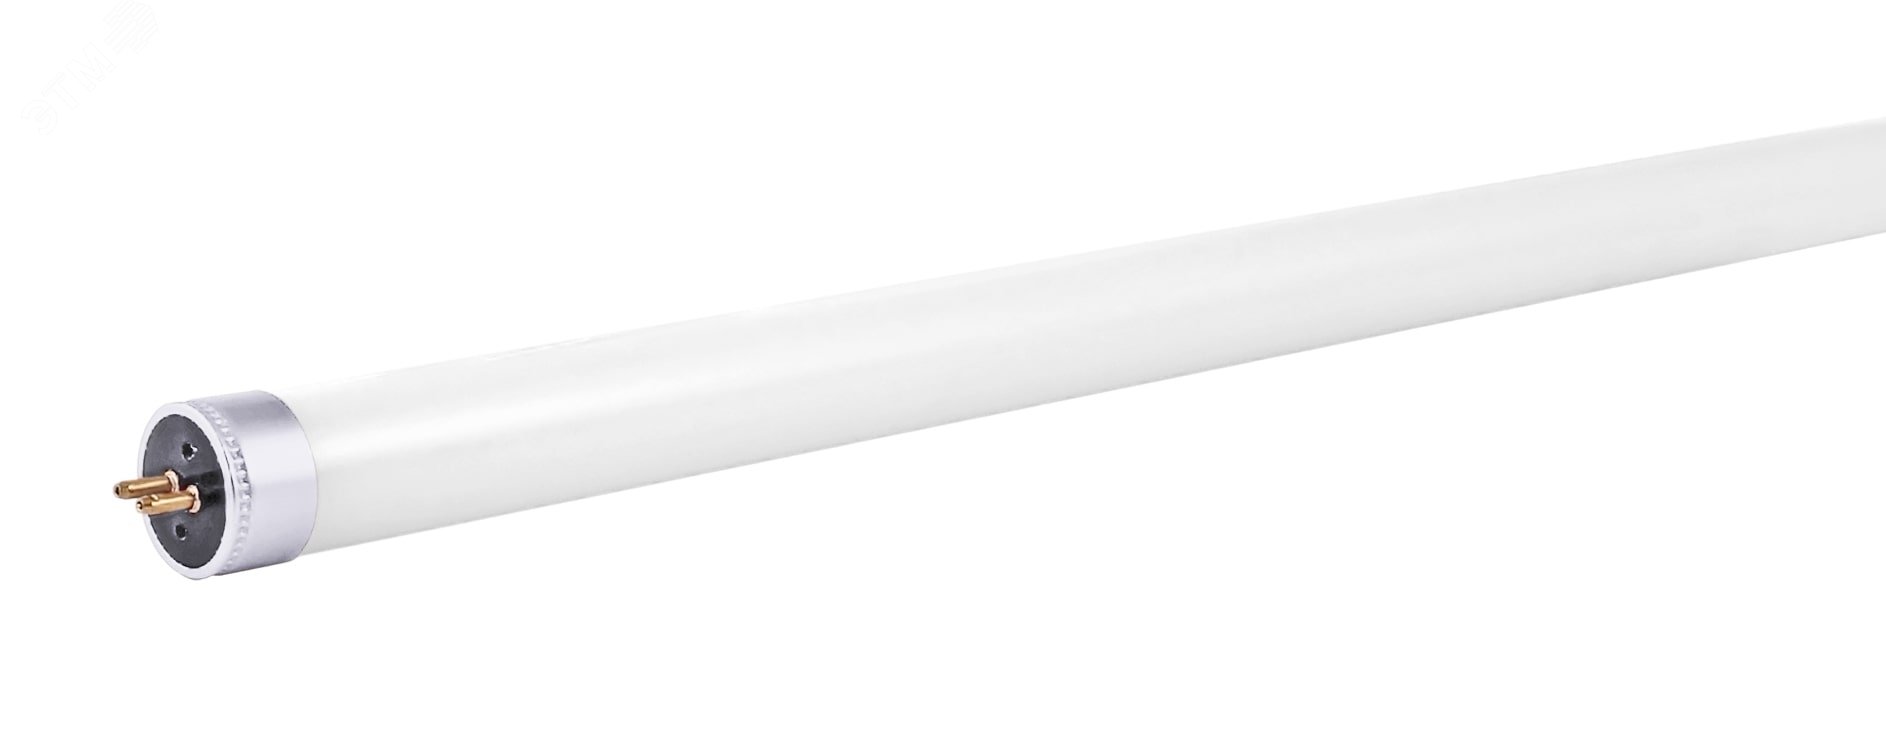 Лампа LED 8вт G5 холодный белый (установка во зможна после демонтажа ПРА),стекло 5016040 JazzWay